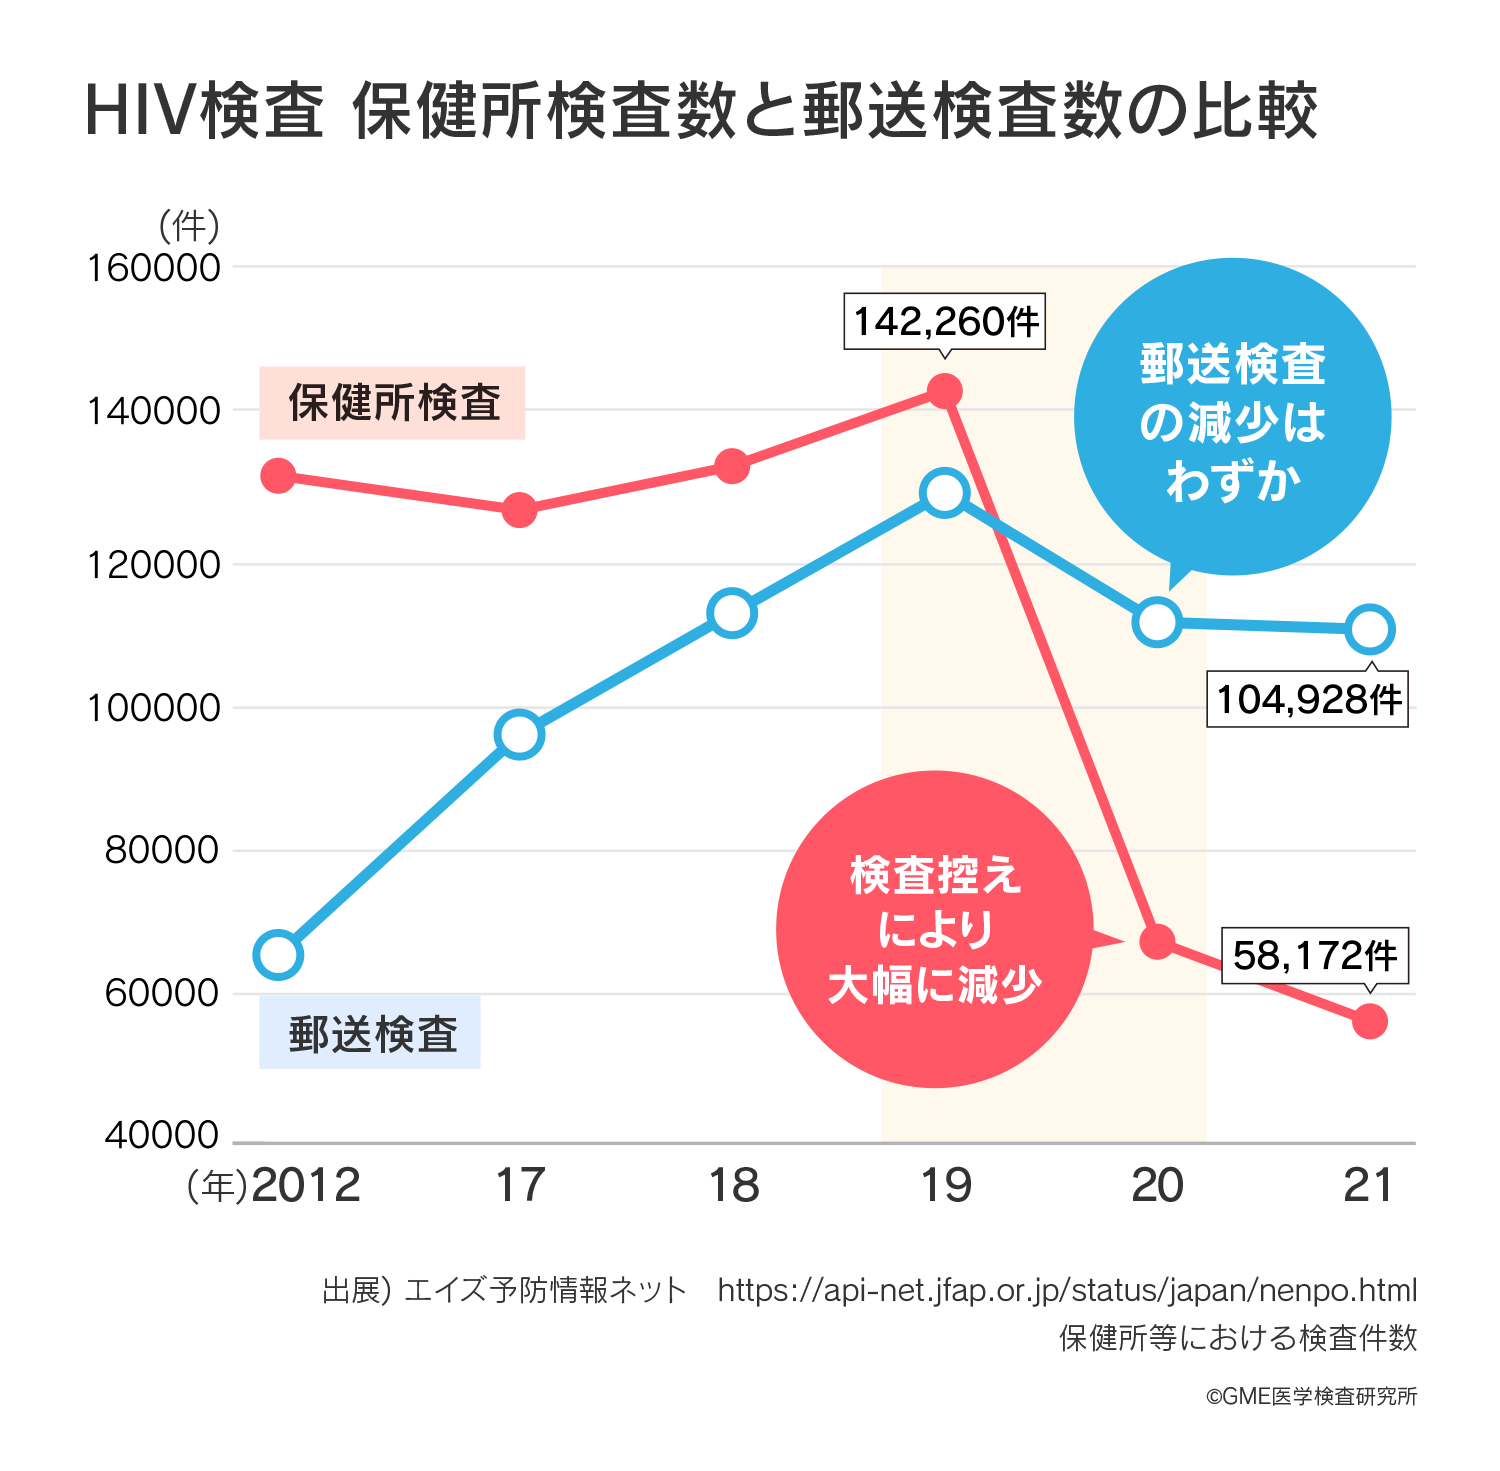 HIV検査の保健所検査数と郵送検査数の比較